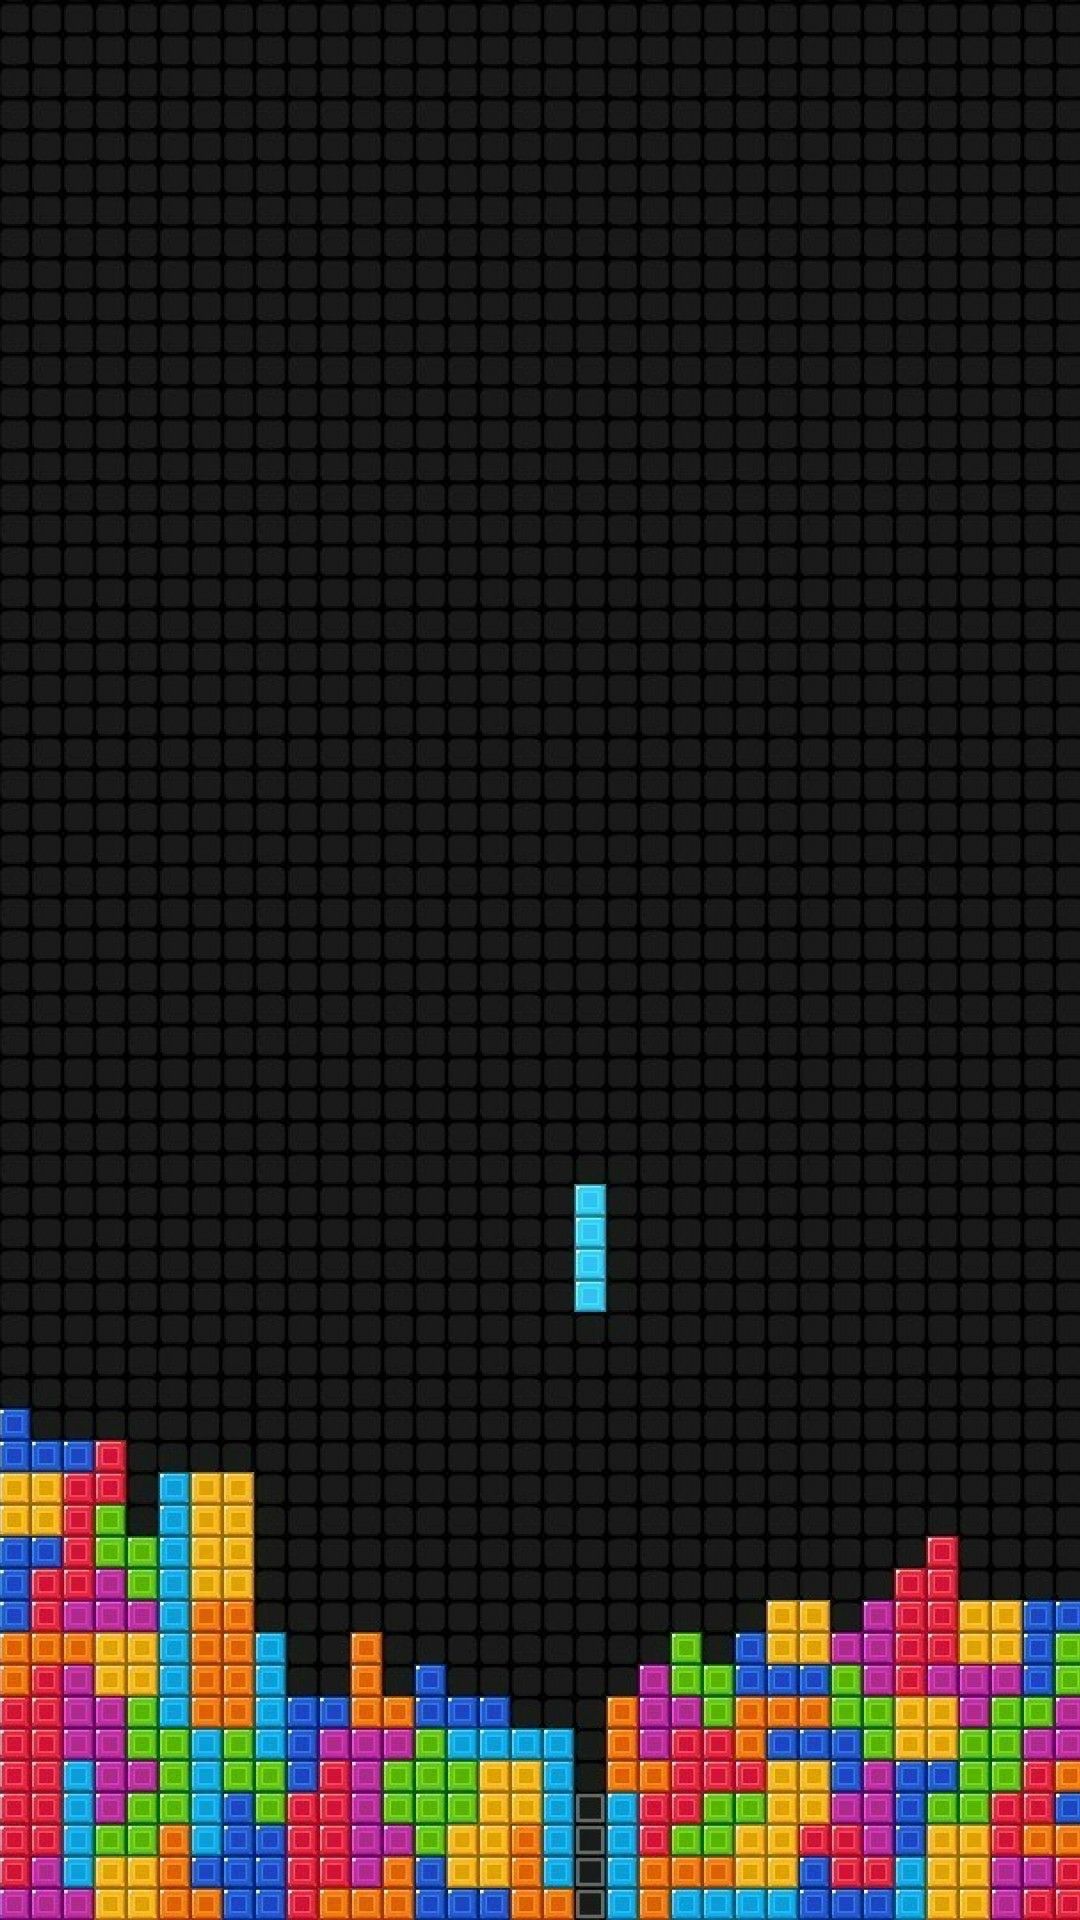 Free Download Tetris Game 4K HD Wallpaper for Desktop and Mobiles